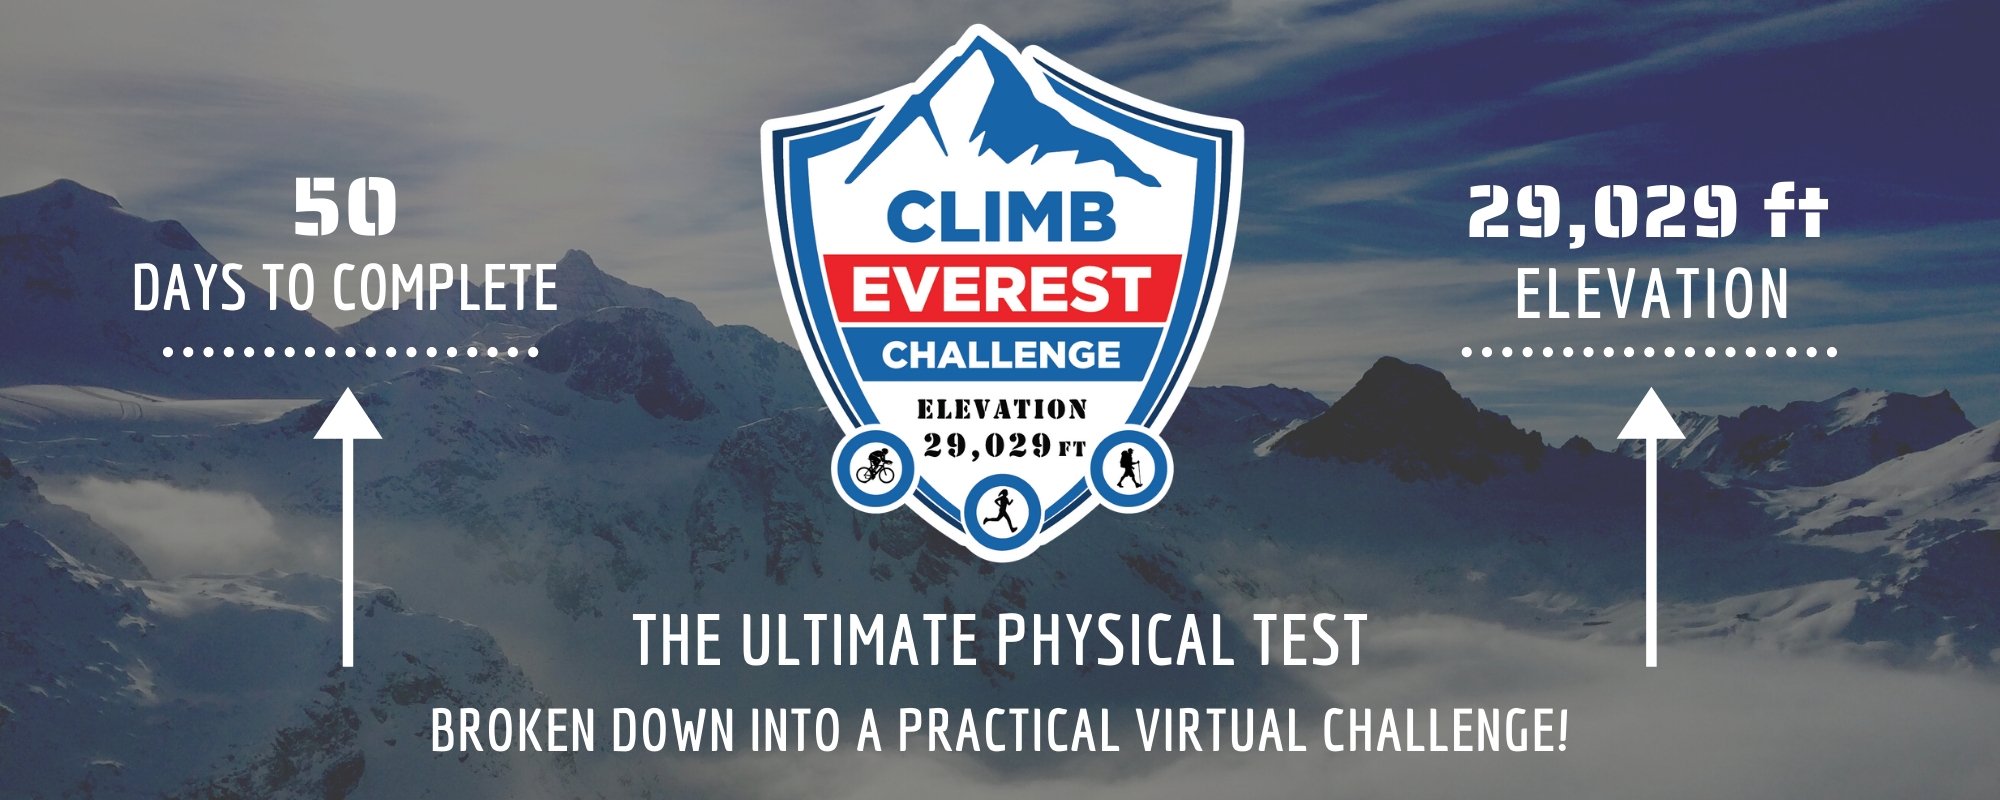 Climb Everest Challenge